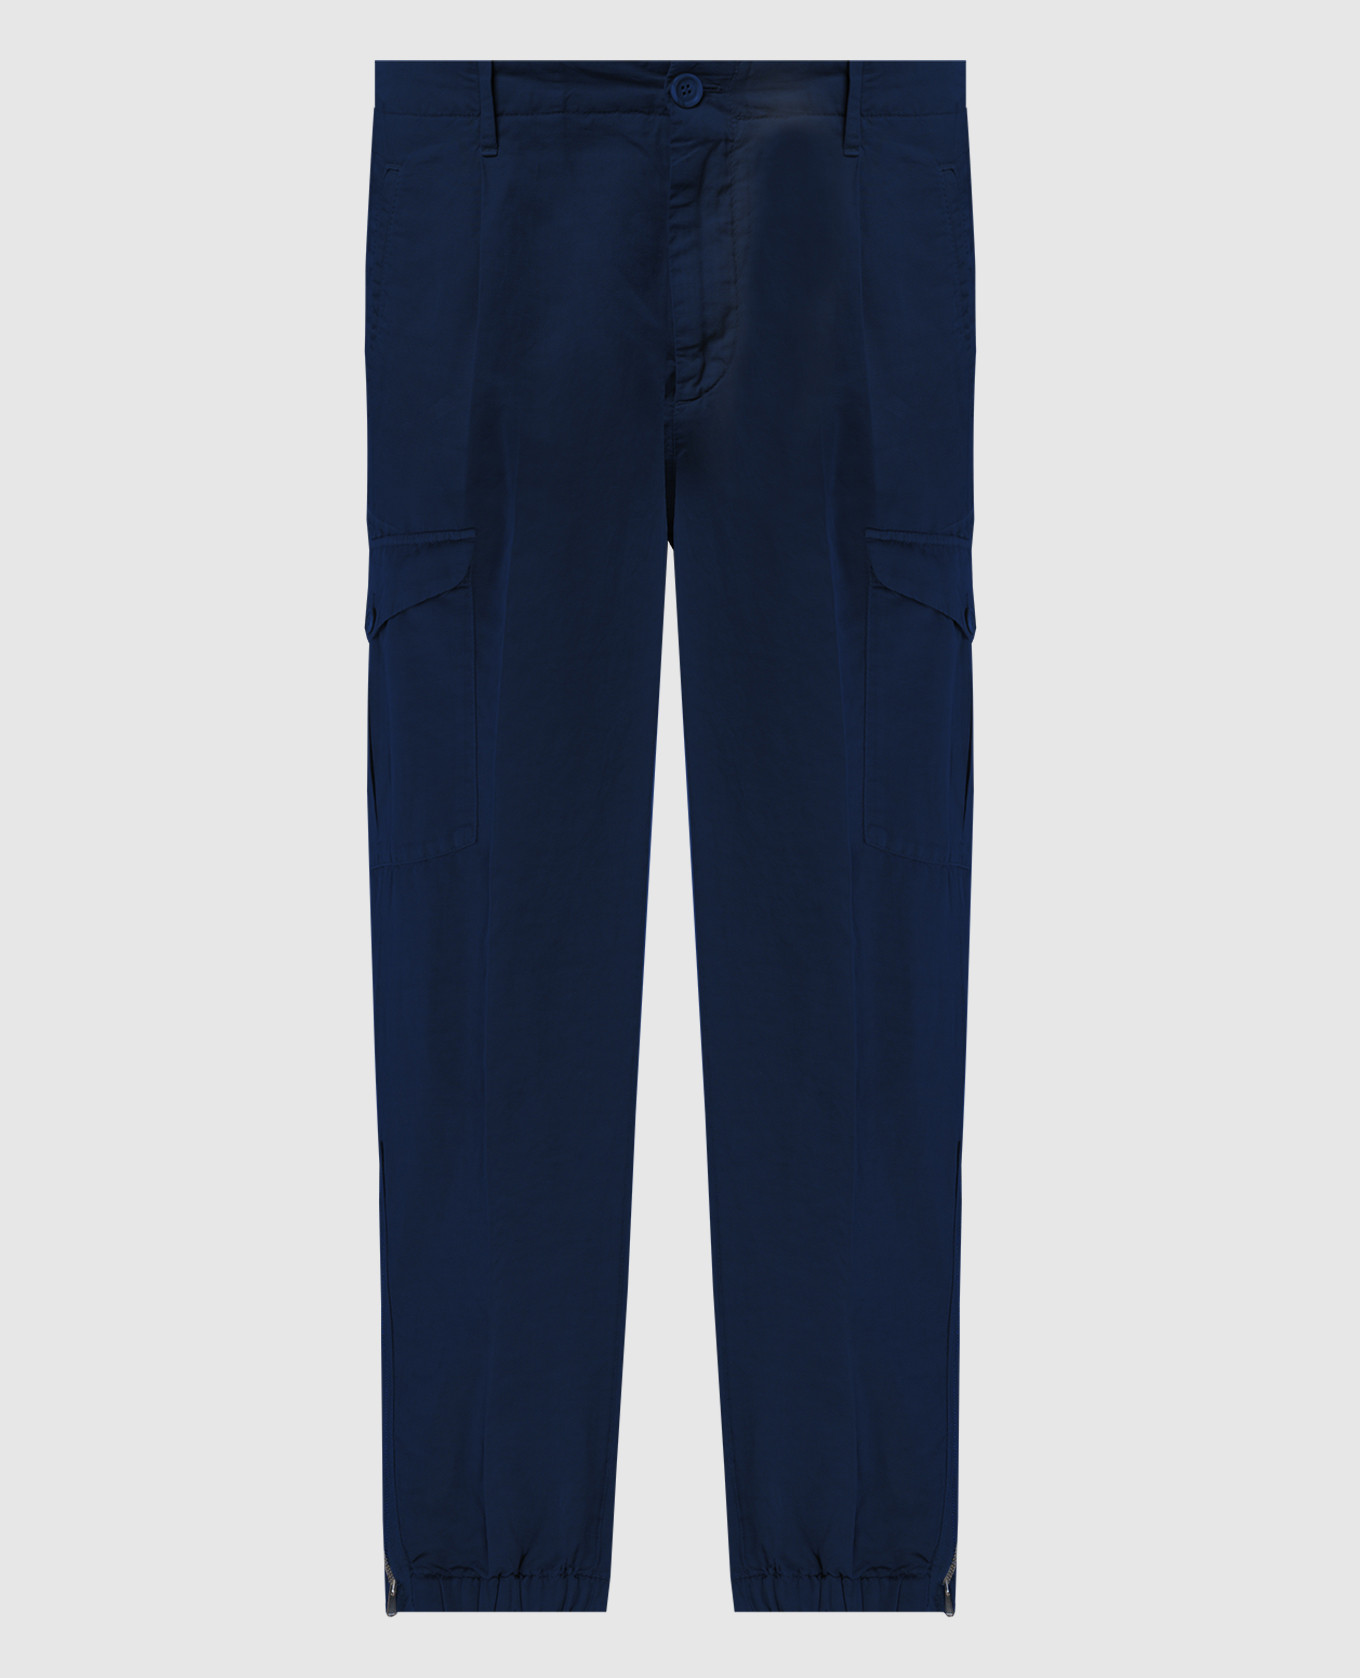 Blue linen cargo pants